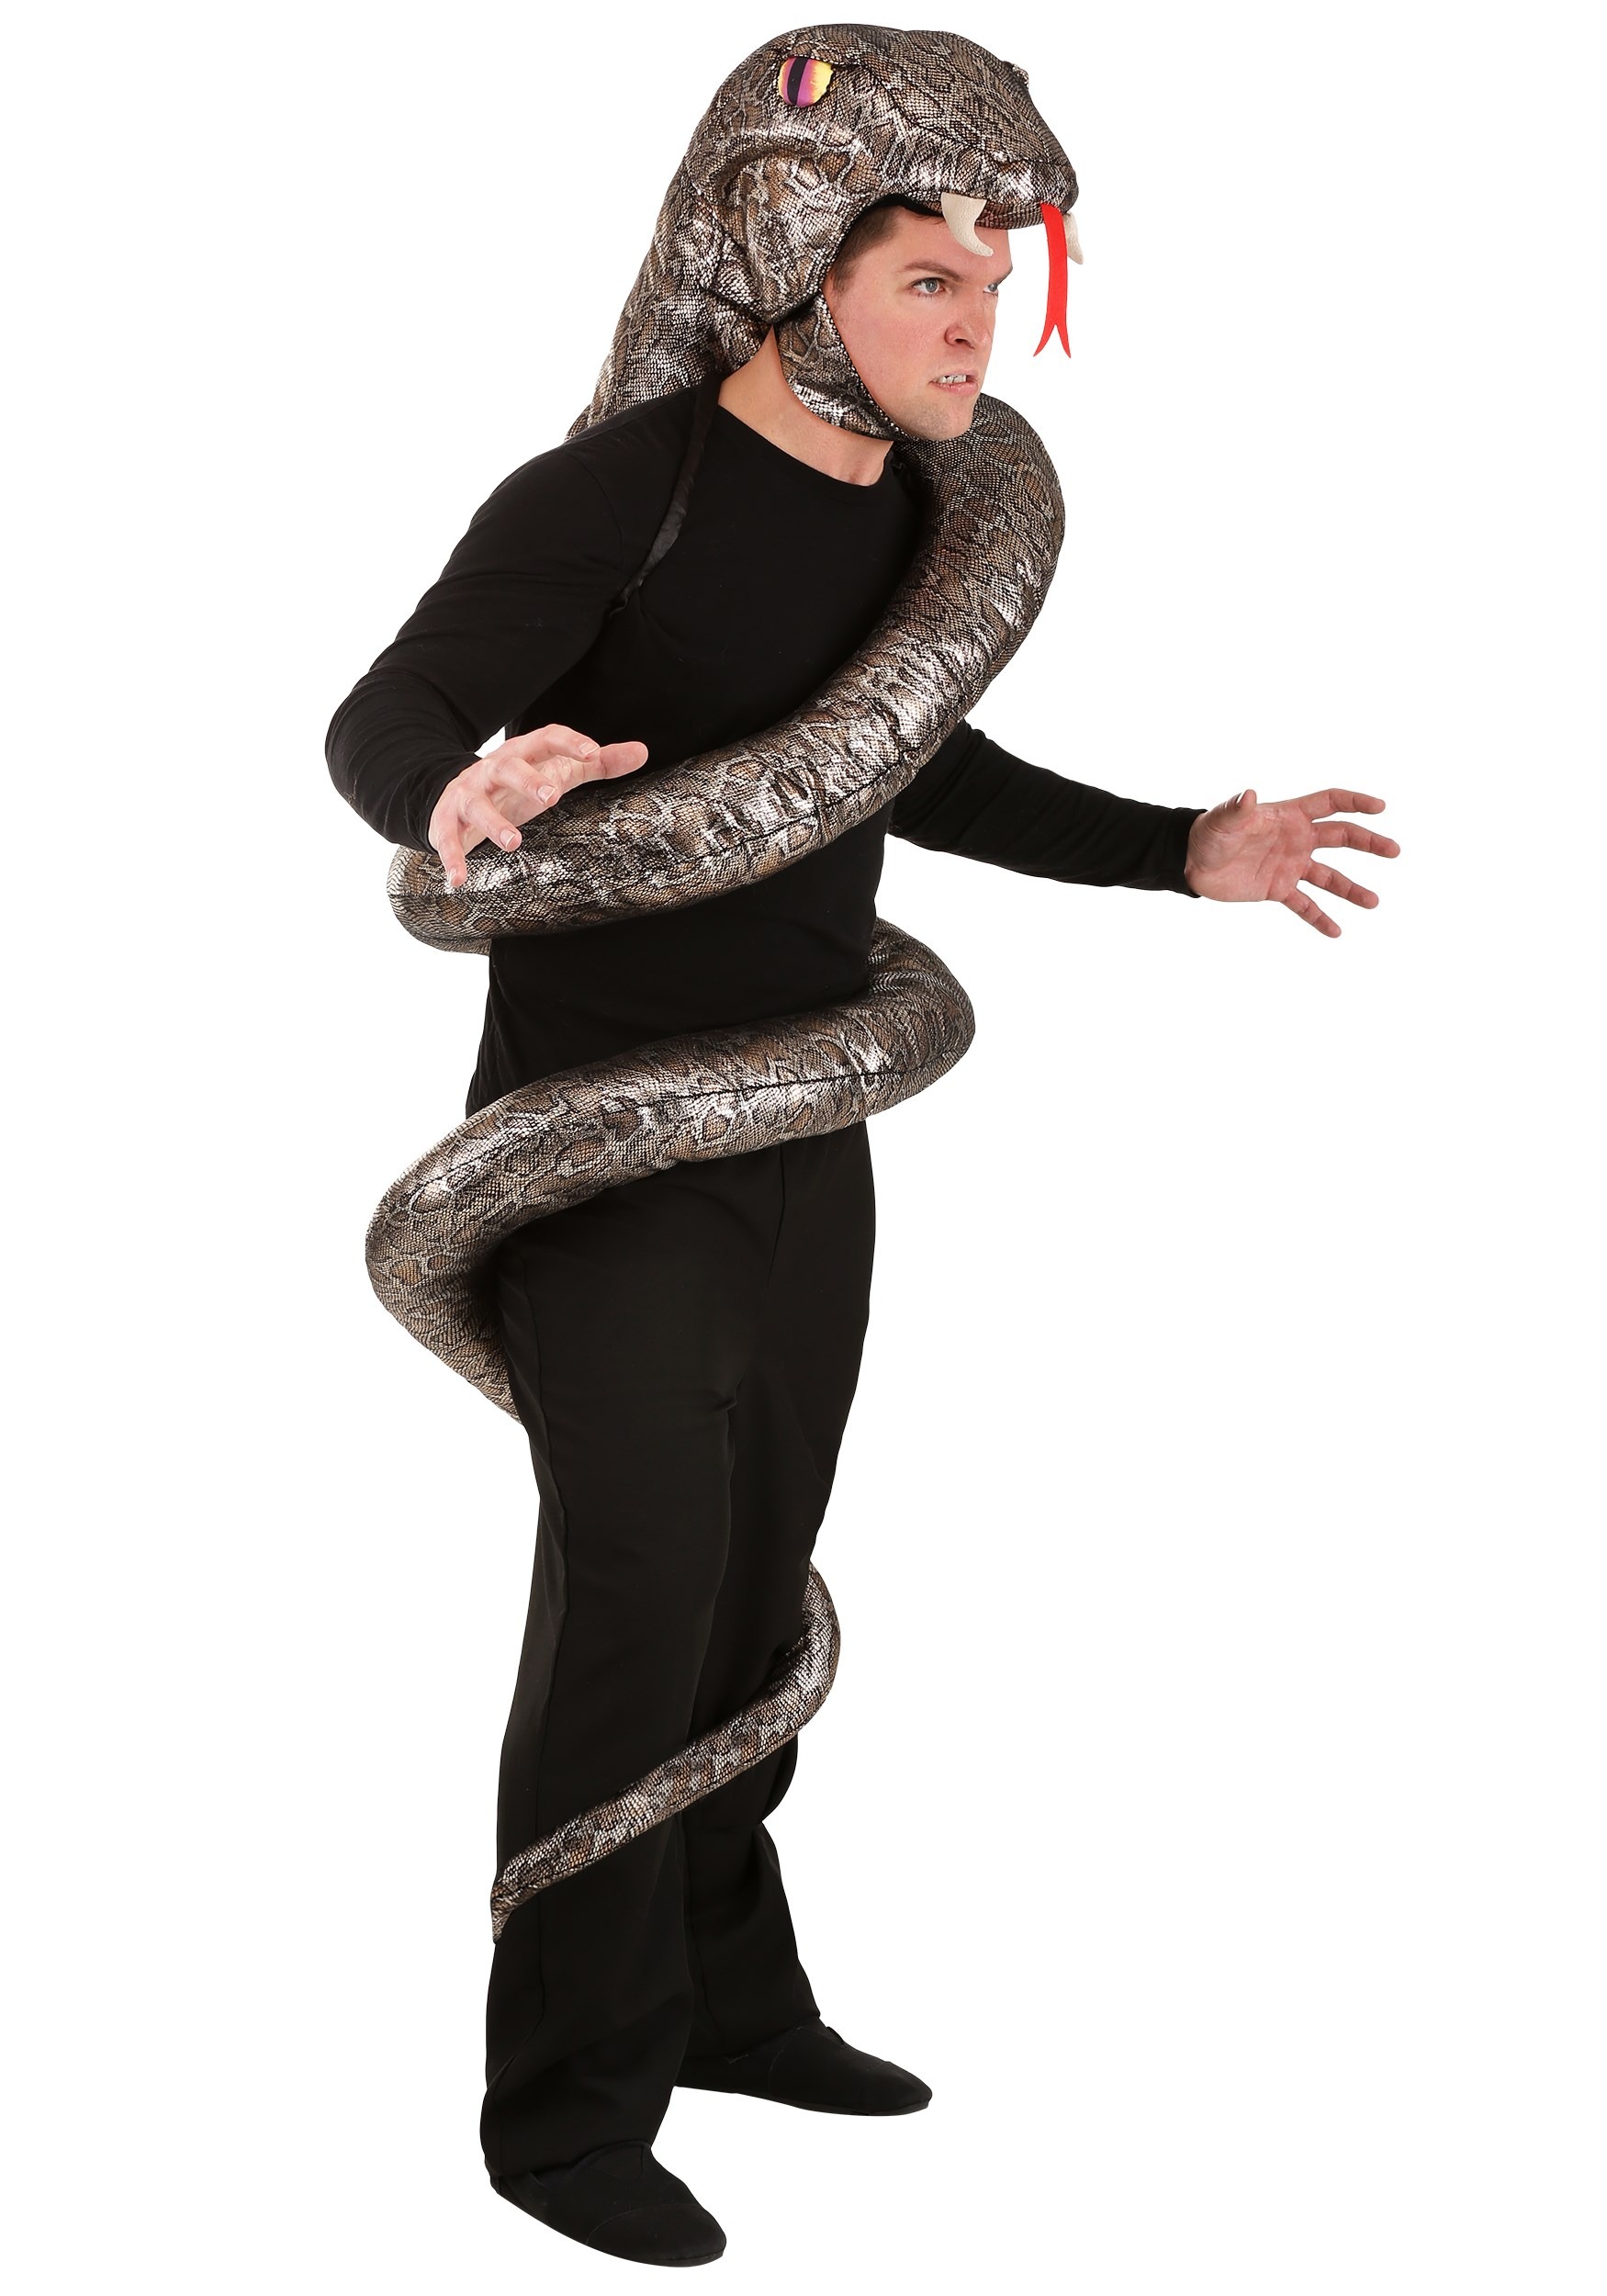 Костюм змеи для девочки своими руками фото